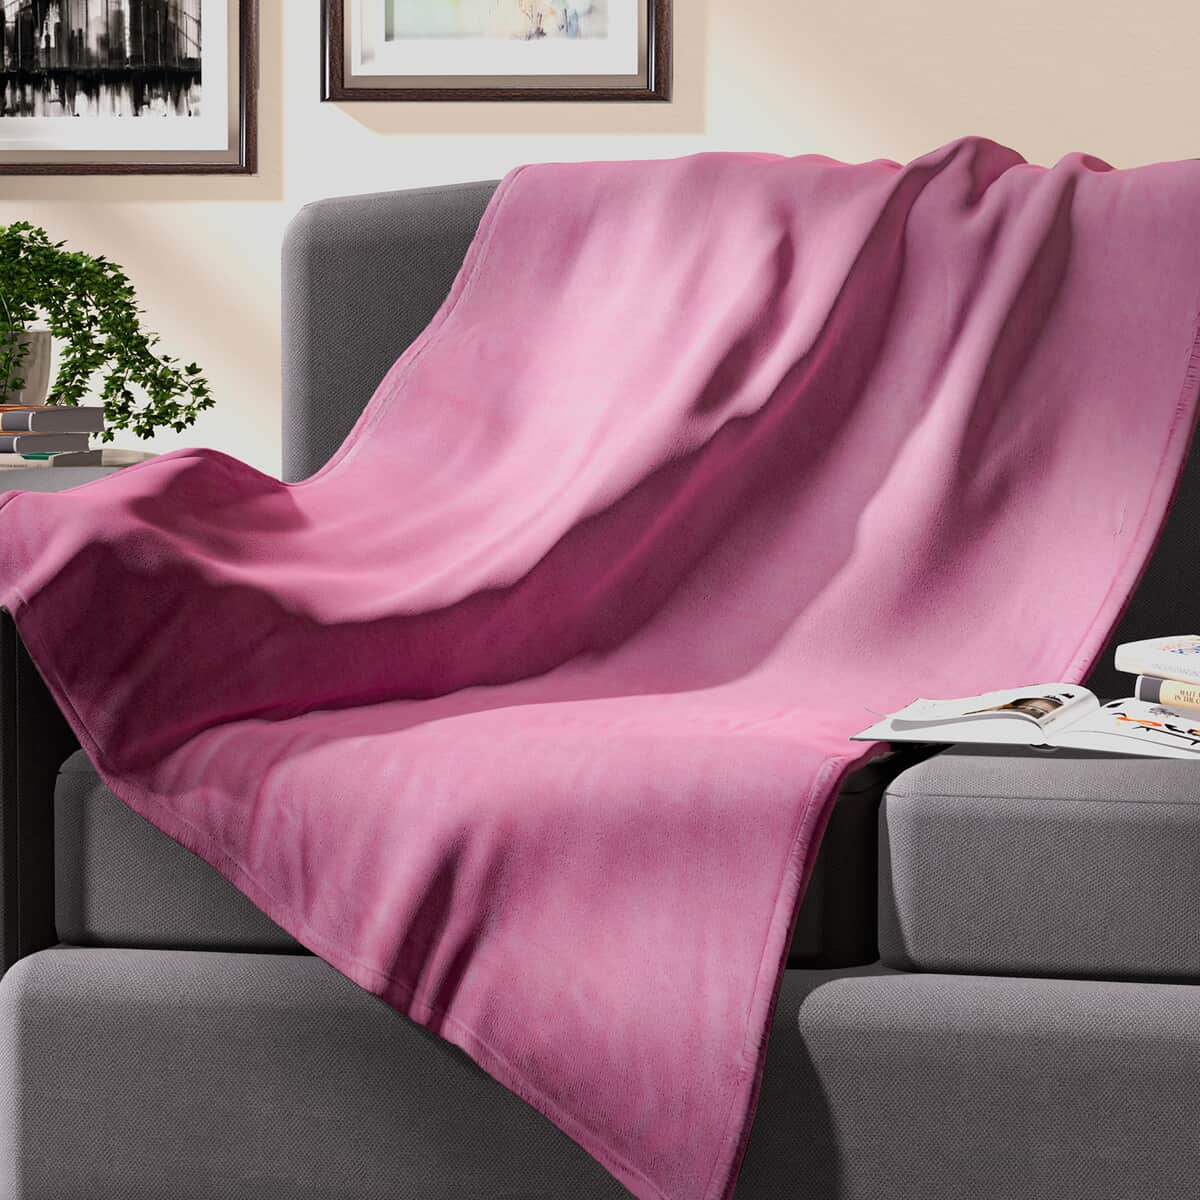 Homesmart Pink Solid Coral Fleece Warmth and Soft Blanket image number 0